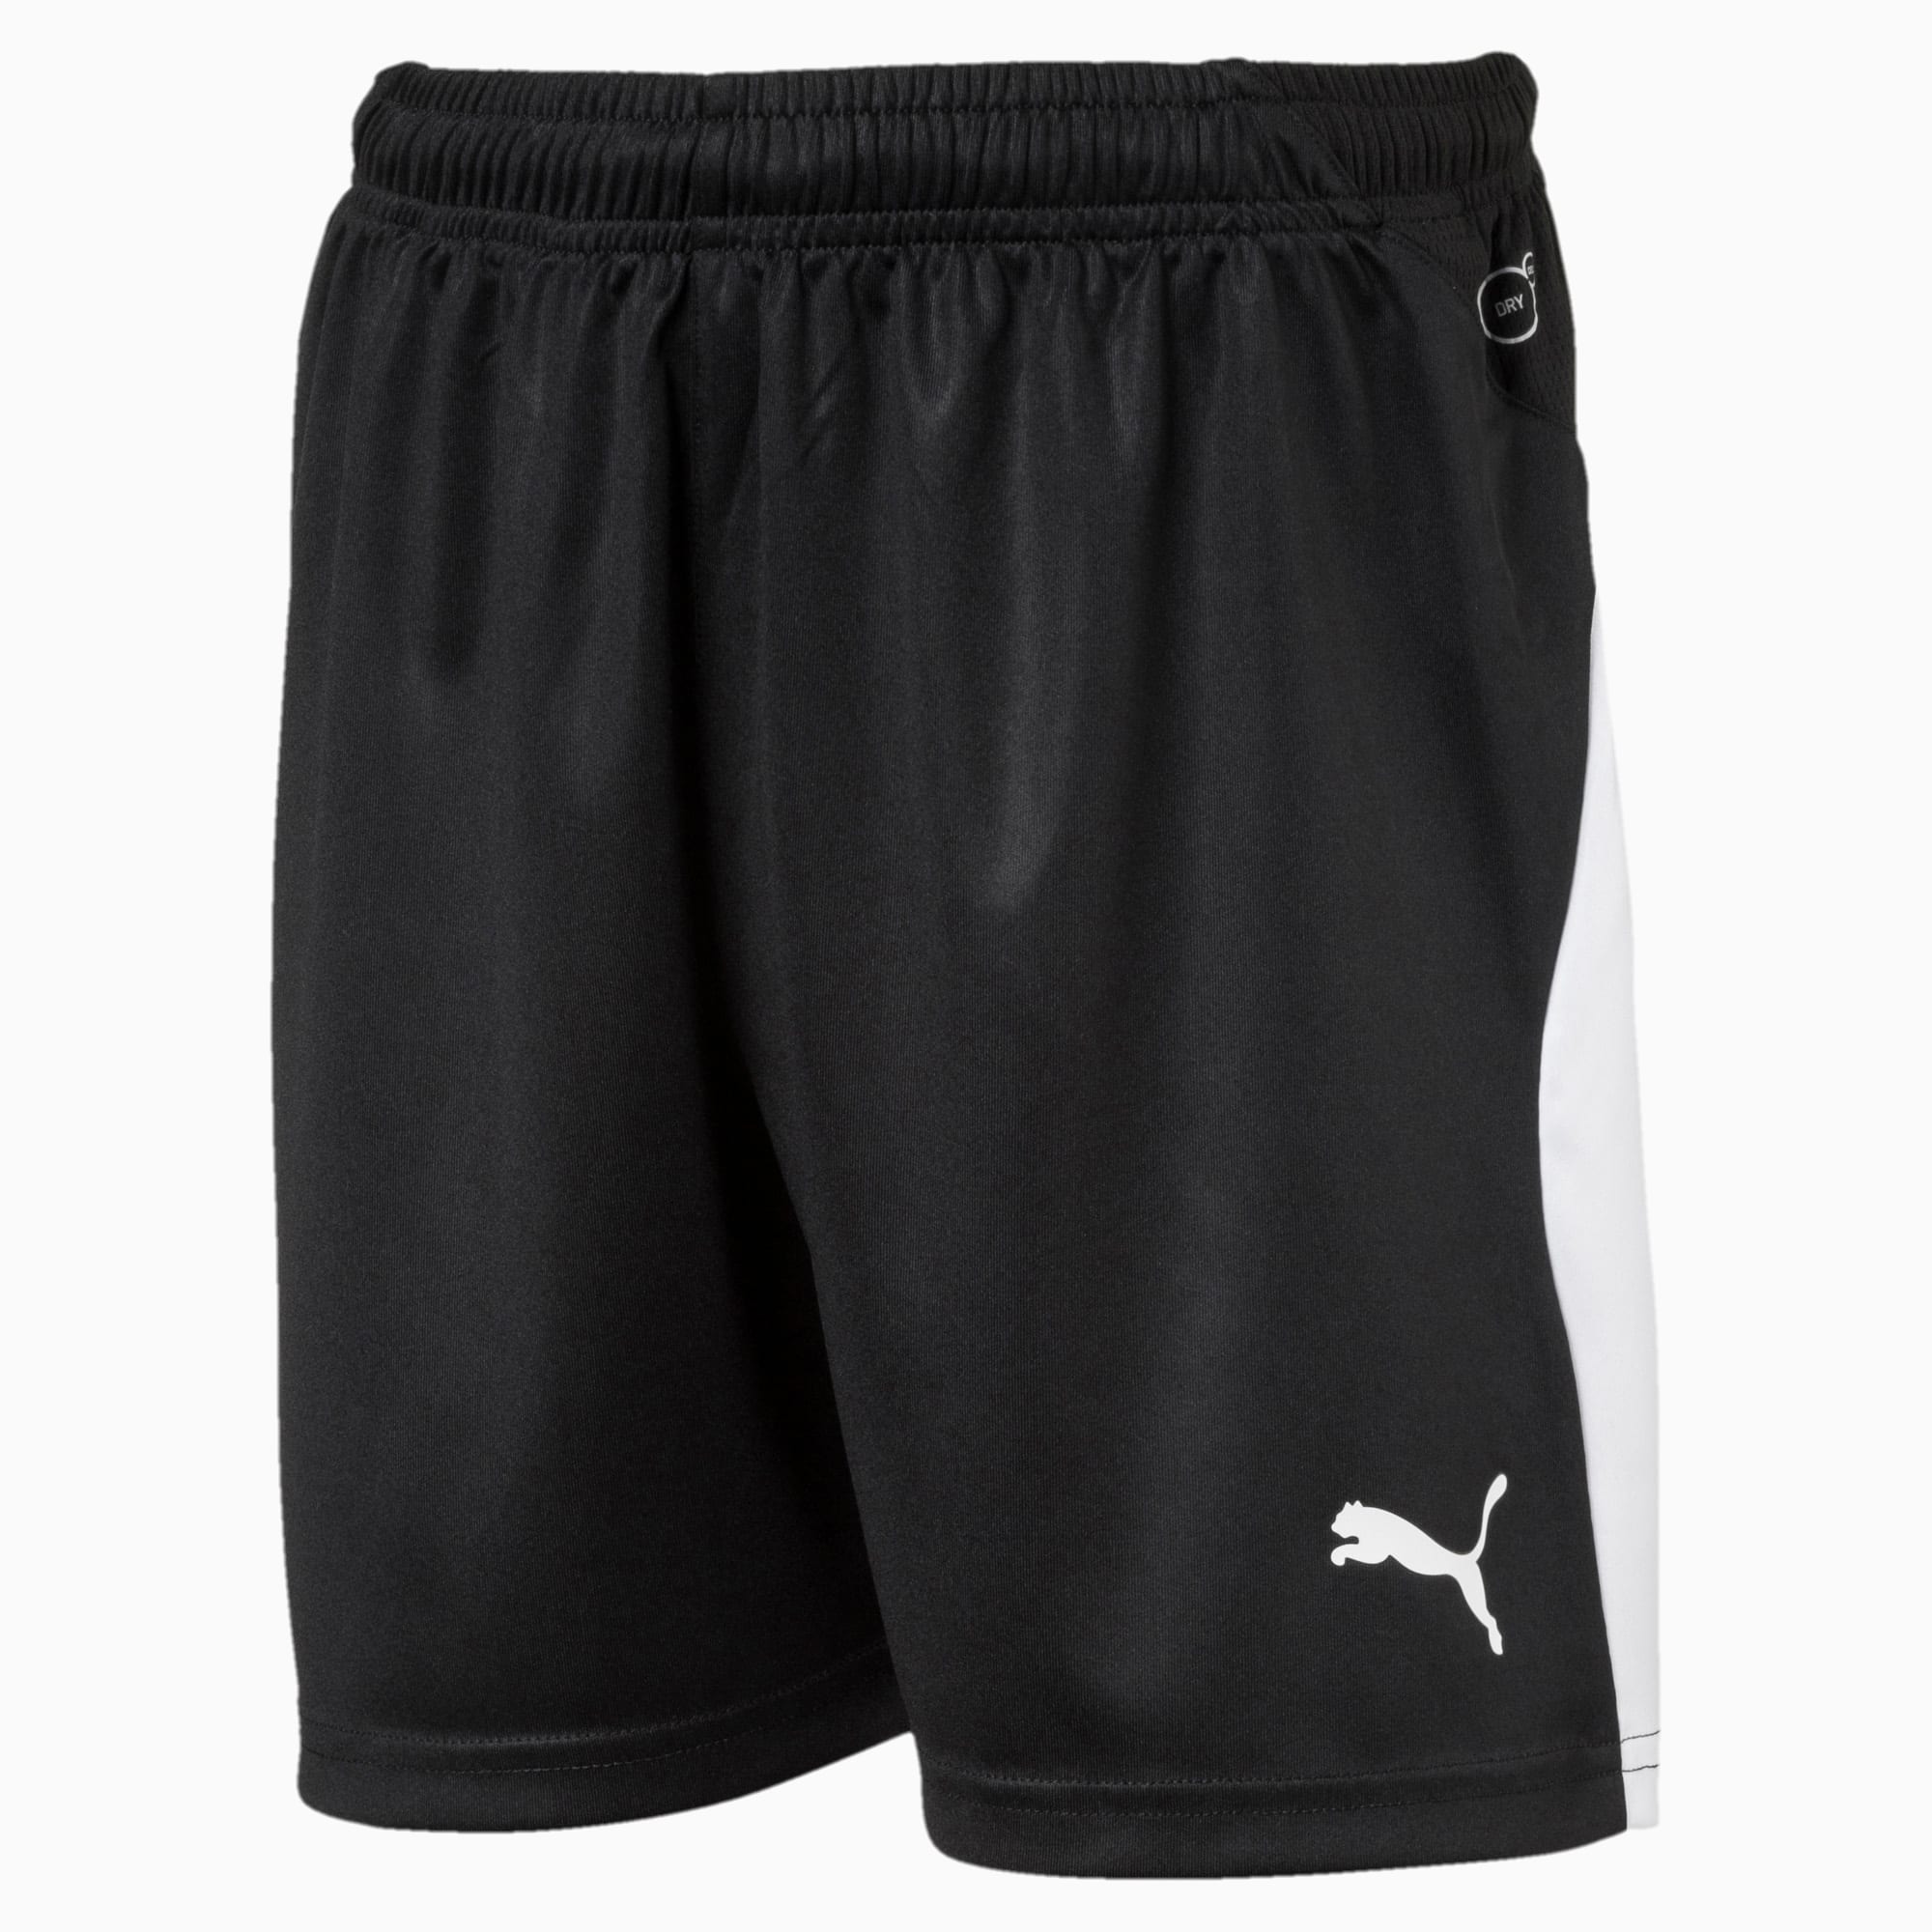 black puma football shorts - 58% OFF 